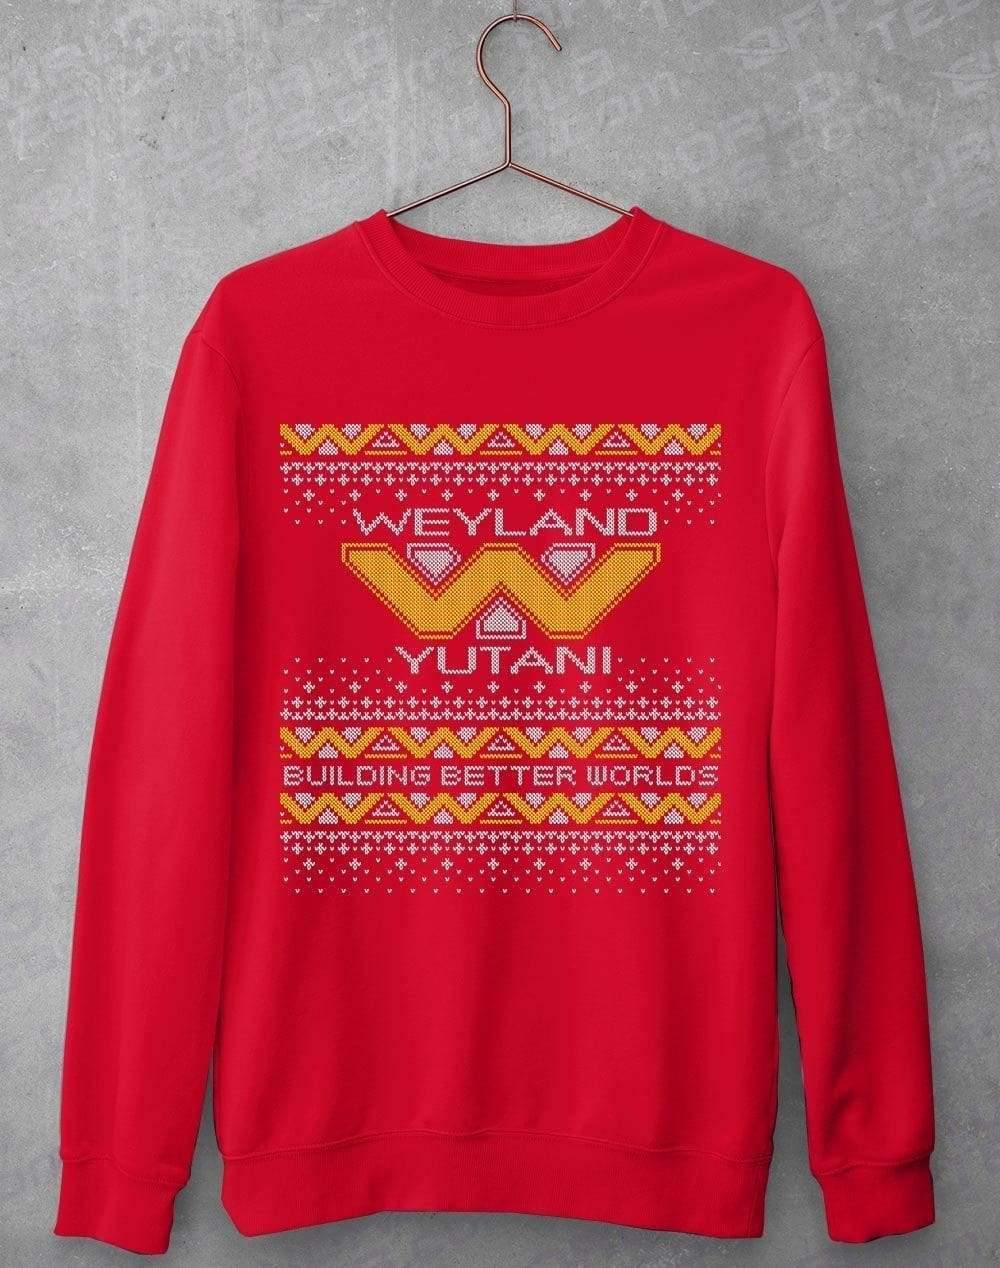 Weyland Yutani Festive Knitted-Look Sweathirt S / Red  - Off World Tees